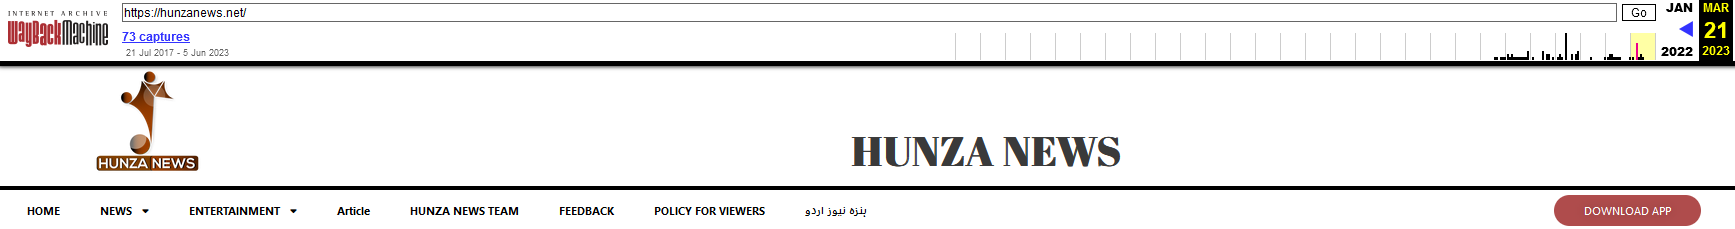 Figure 5 Hunza News website option download app restored